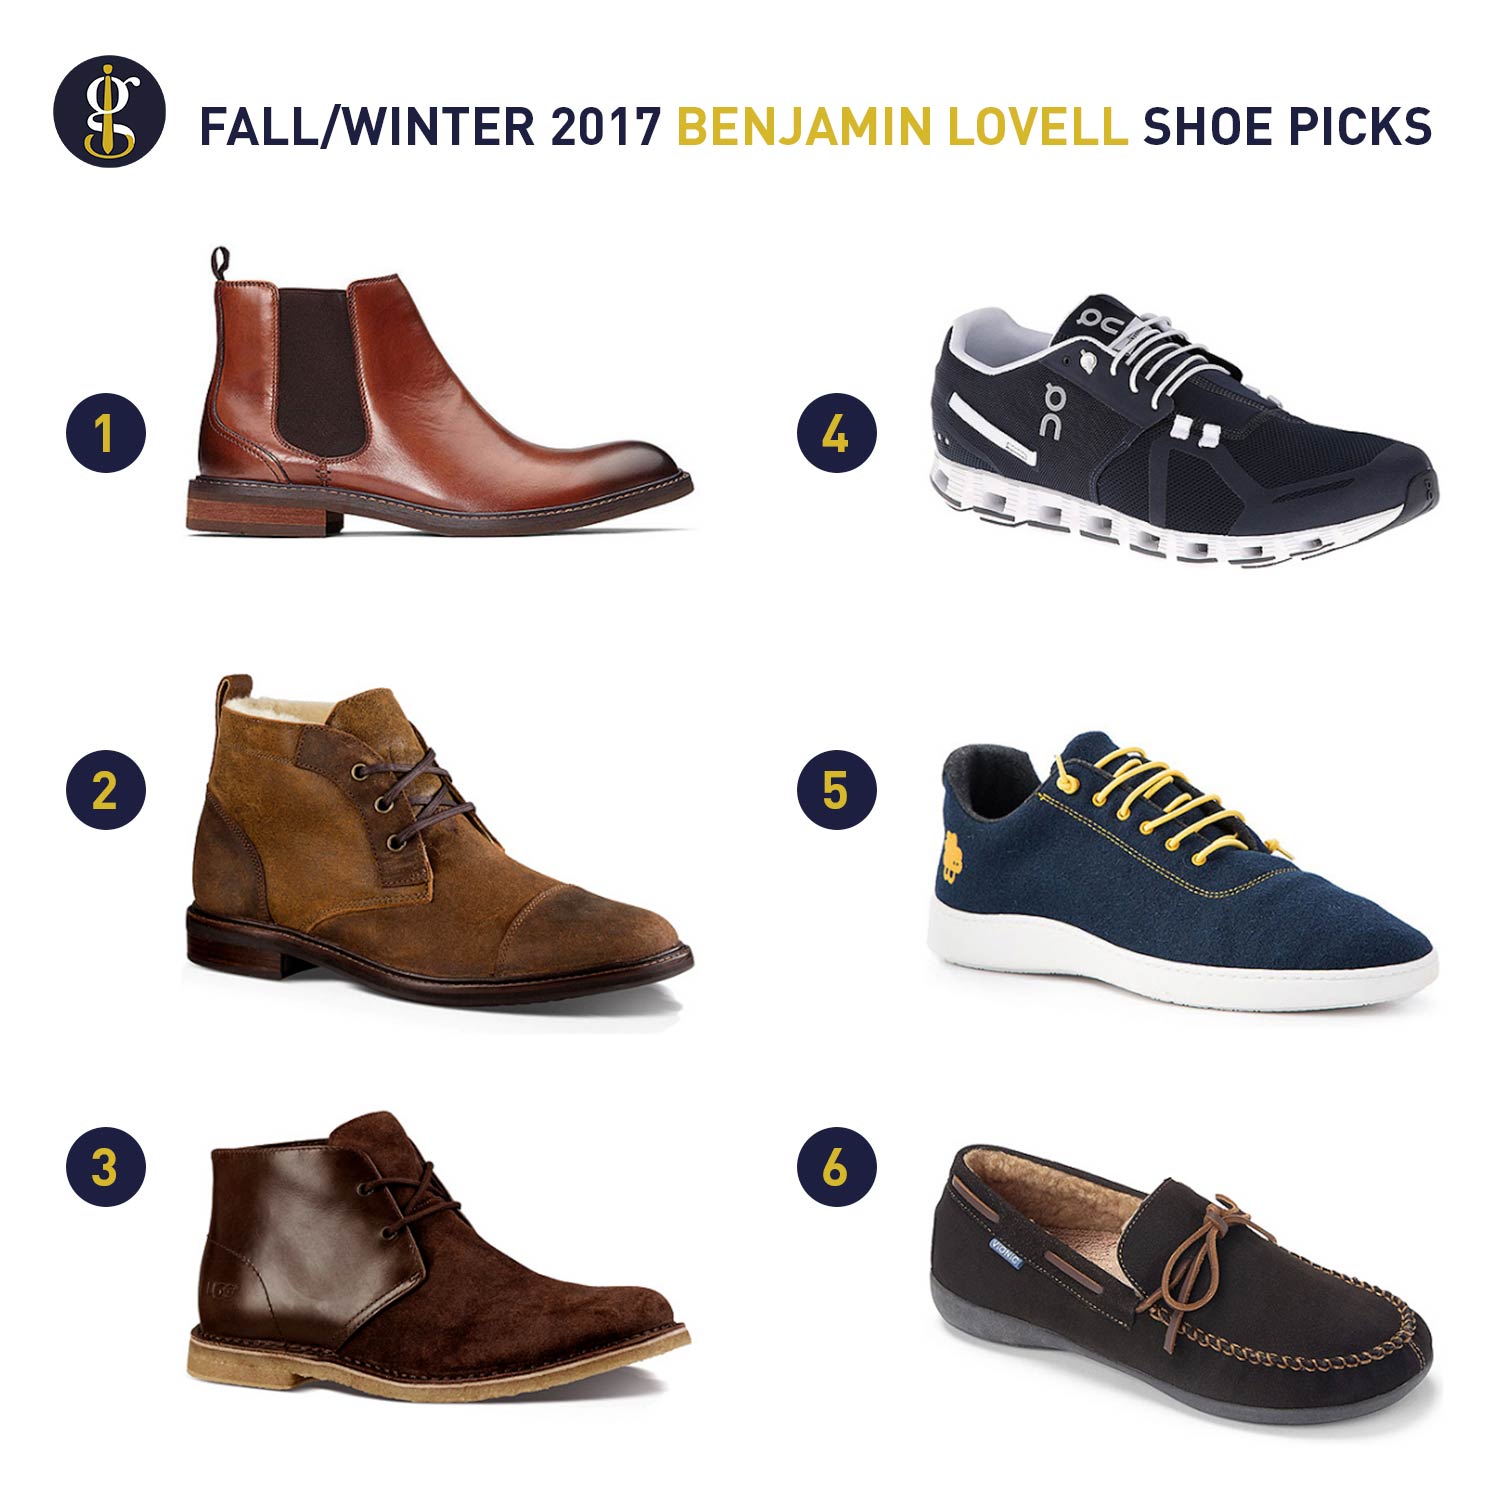 Benjamin Lovell Shoe Picks For Fall Winter 2017 | GENTLEMAN WITHIN